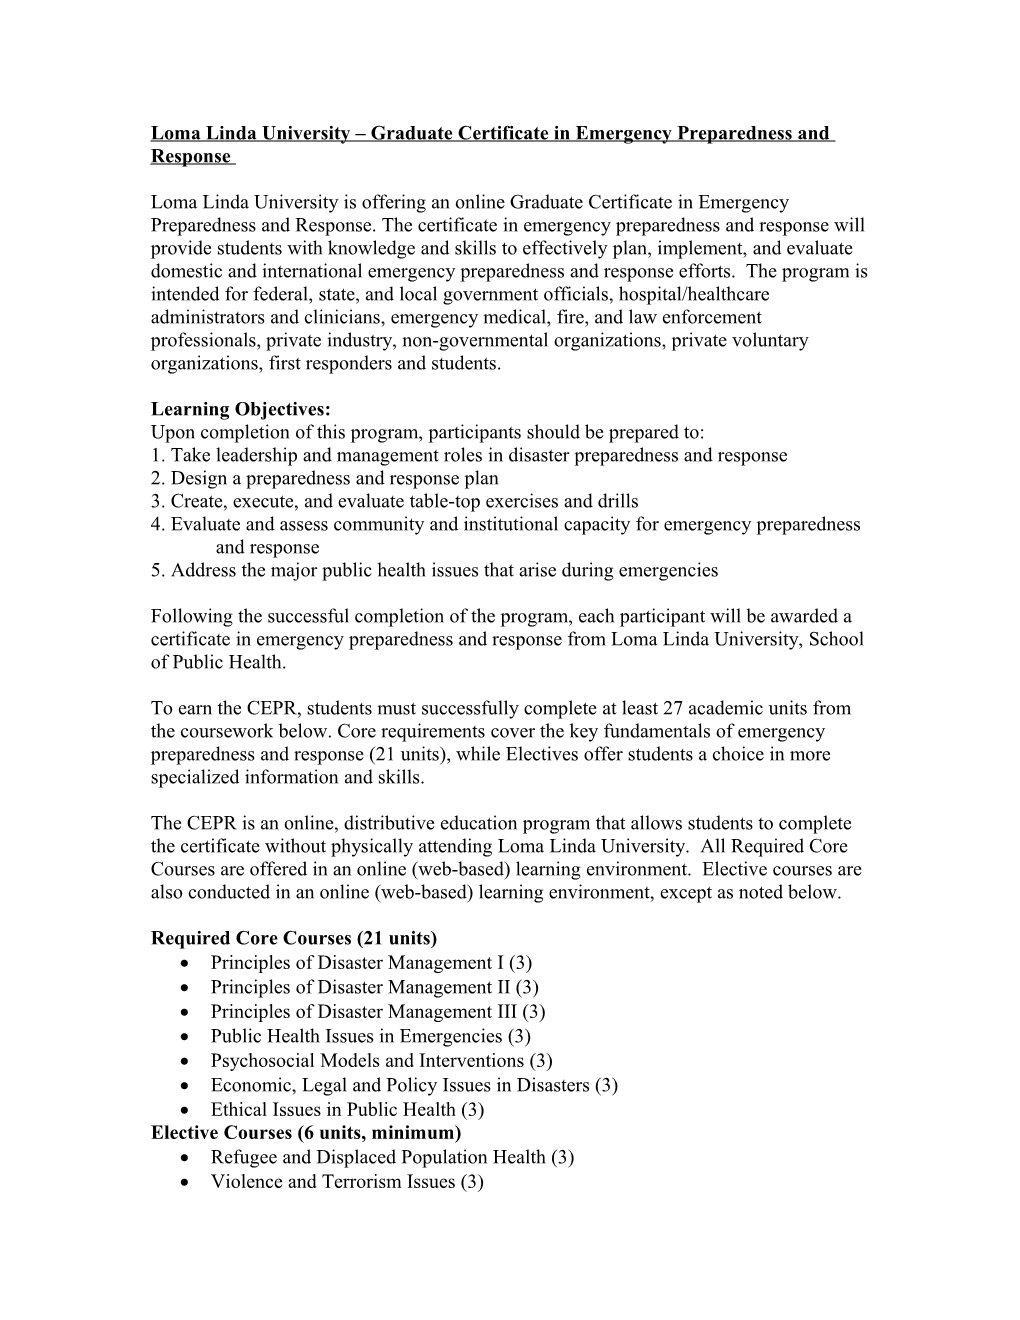 Loma Linda University Graduate Certificate in Emergency Preparedness and Response